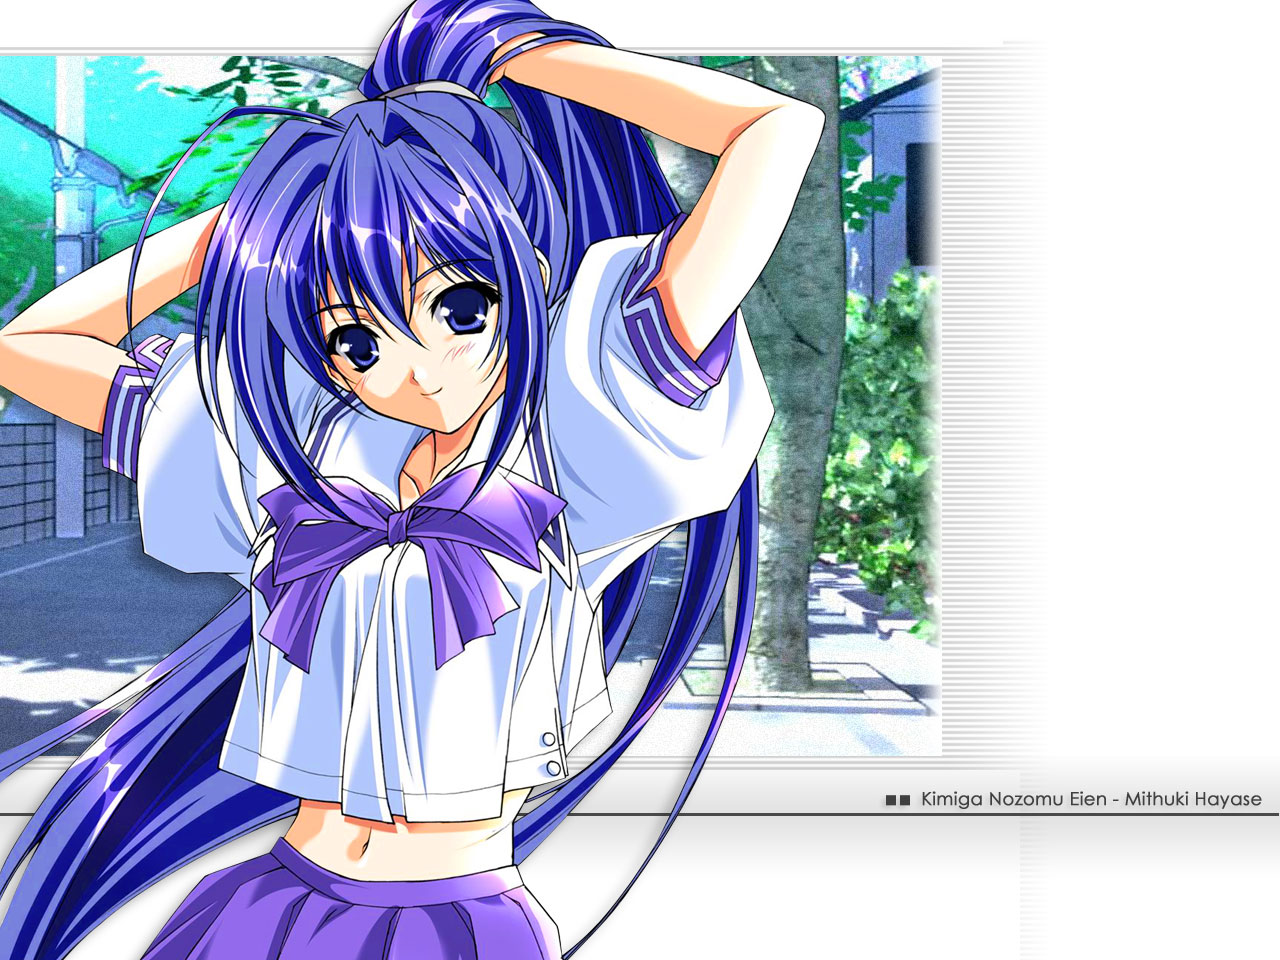 1452091 descargar imagen animado, kimi ga nozomu eien, mitsuki hayase: fondos de pantalla y protectores de pantalla gratis